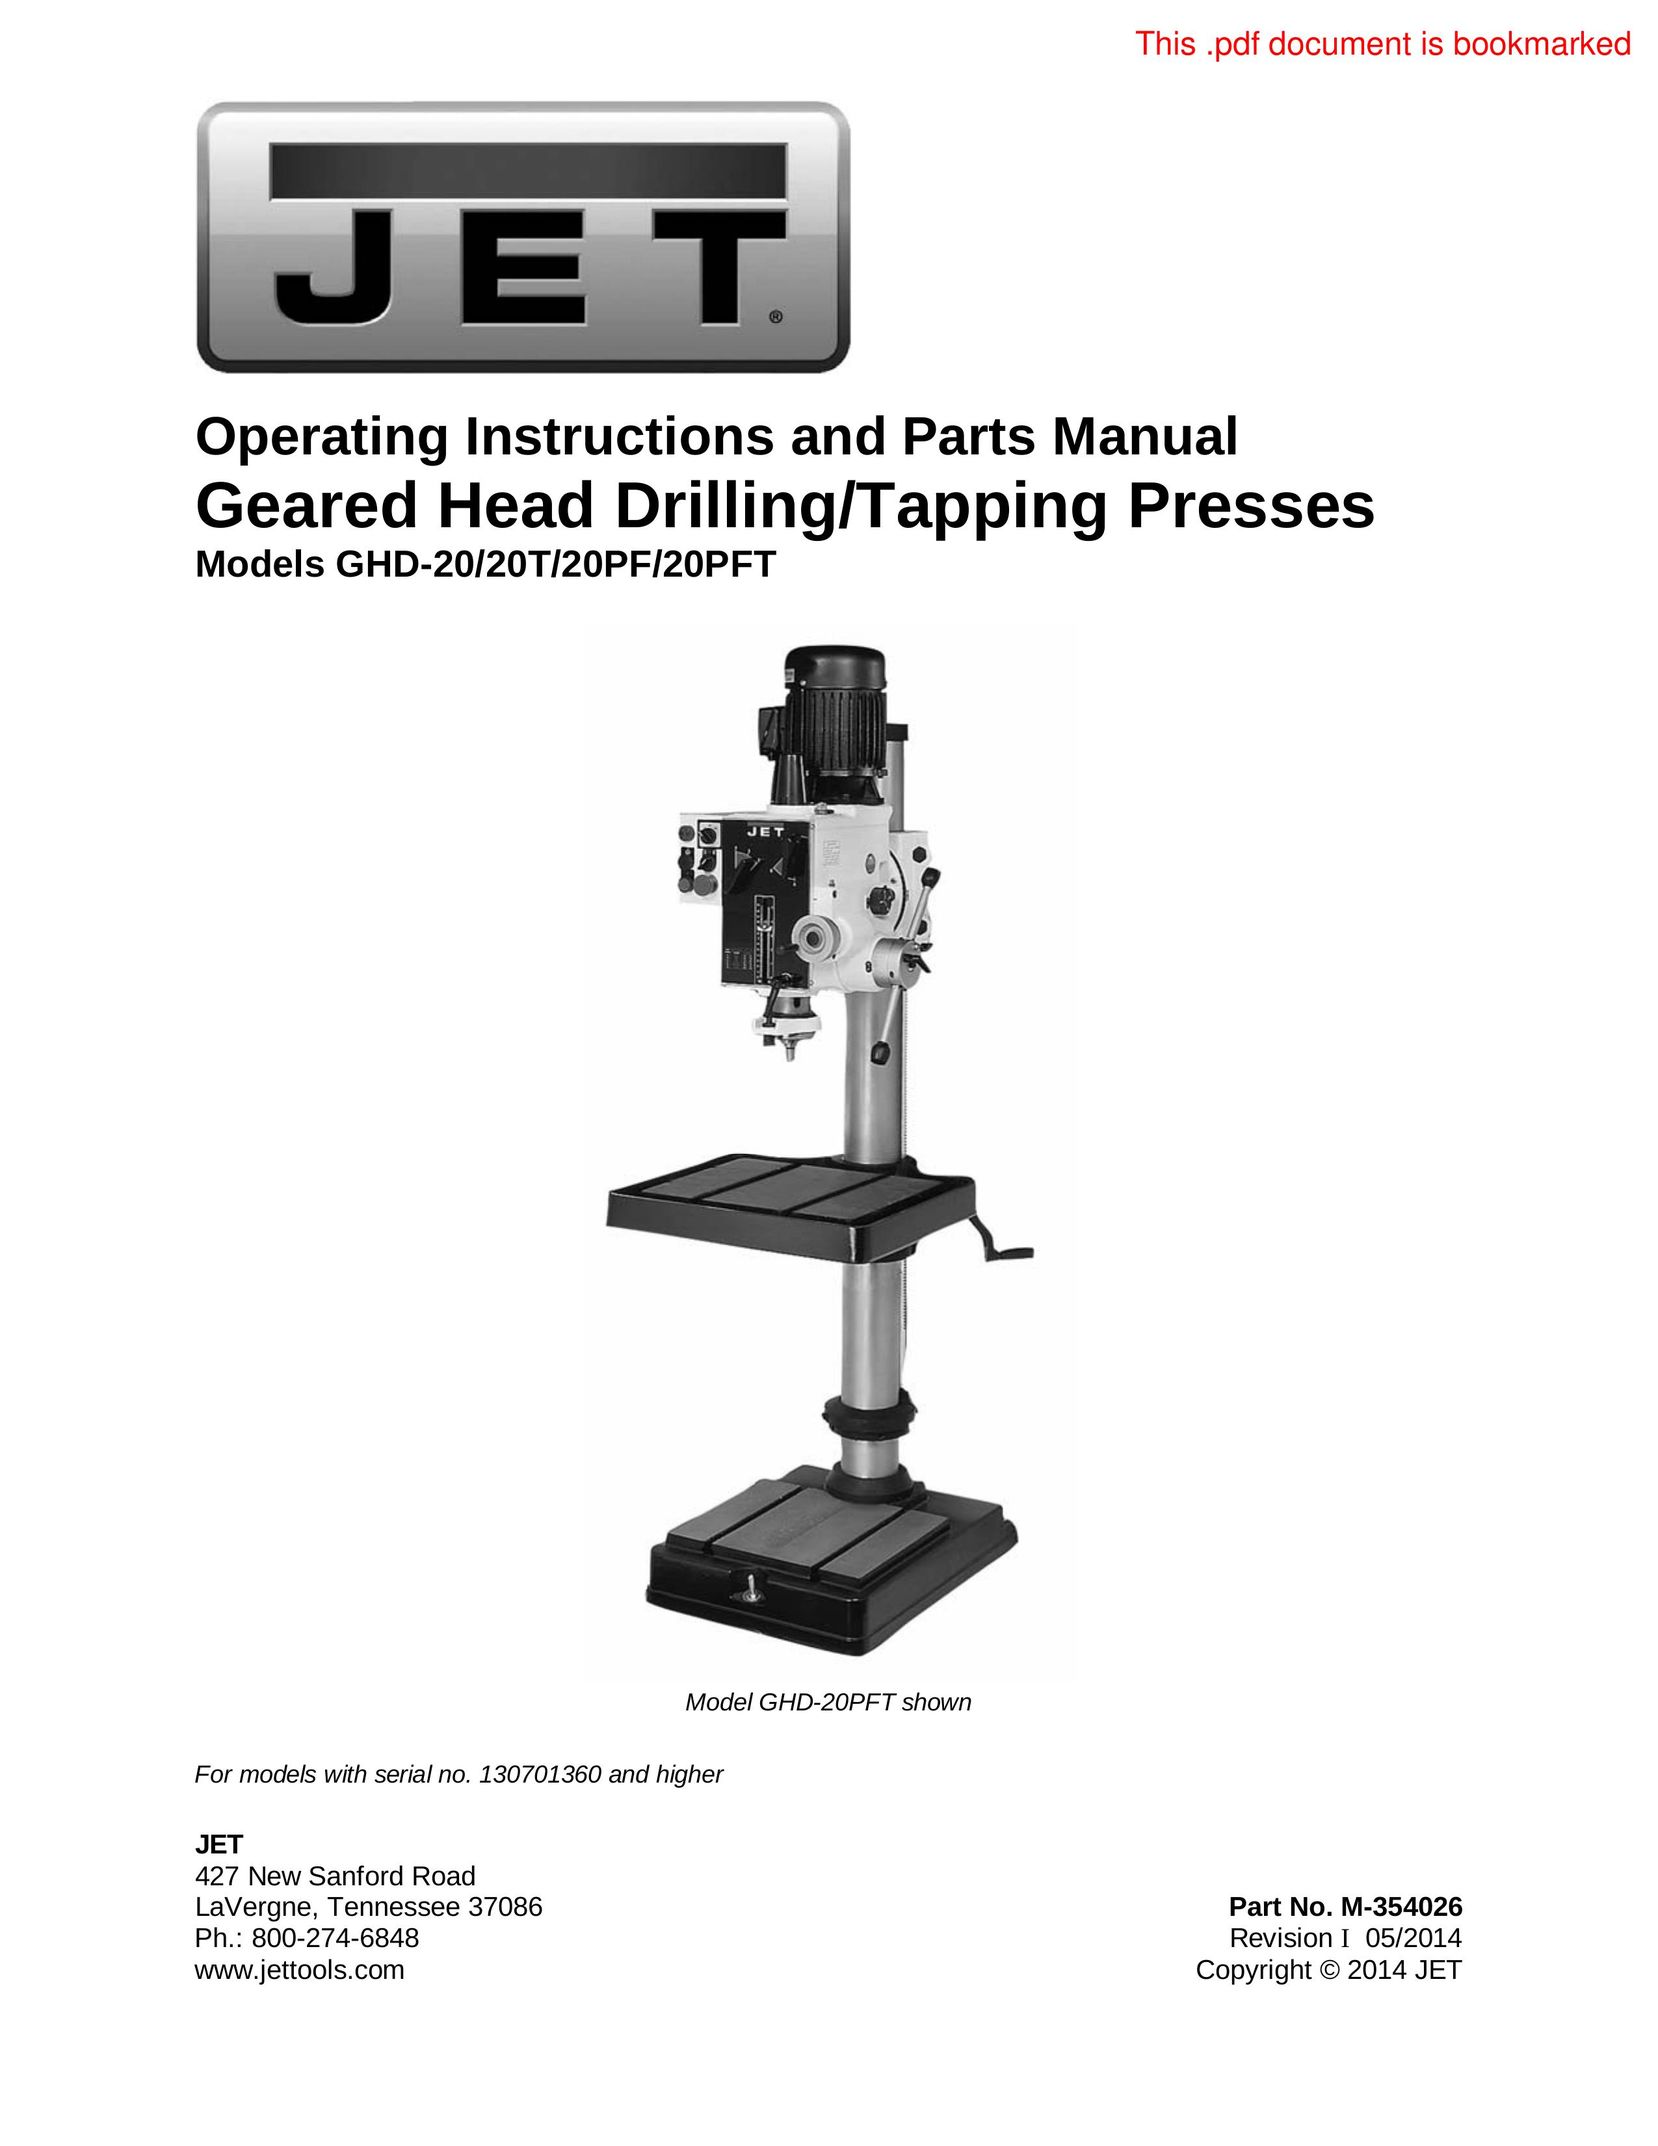 Jet Tools GHD-20 Cordless Drill User Manual